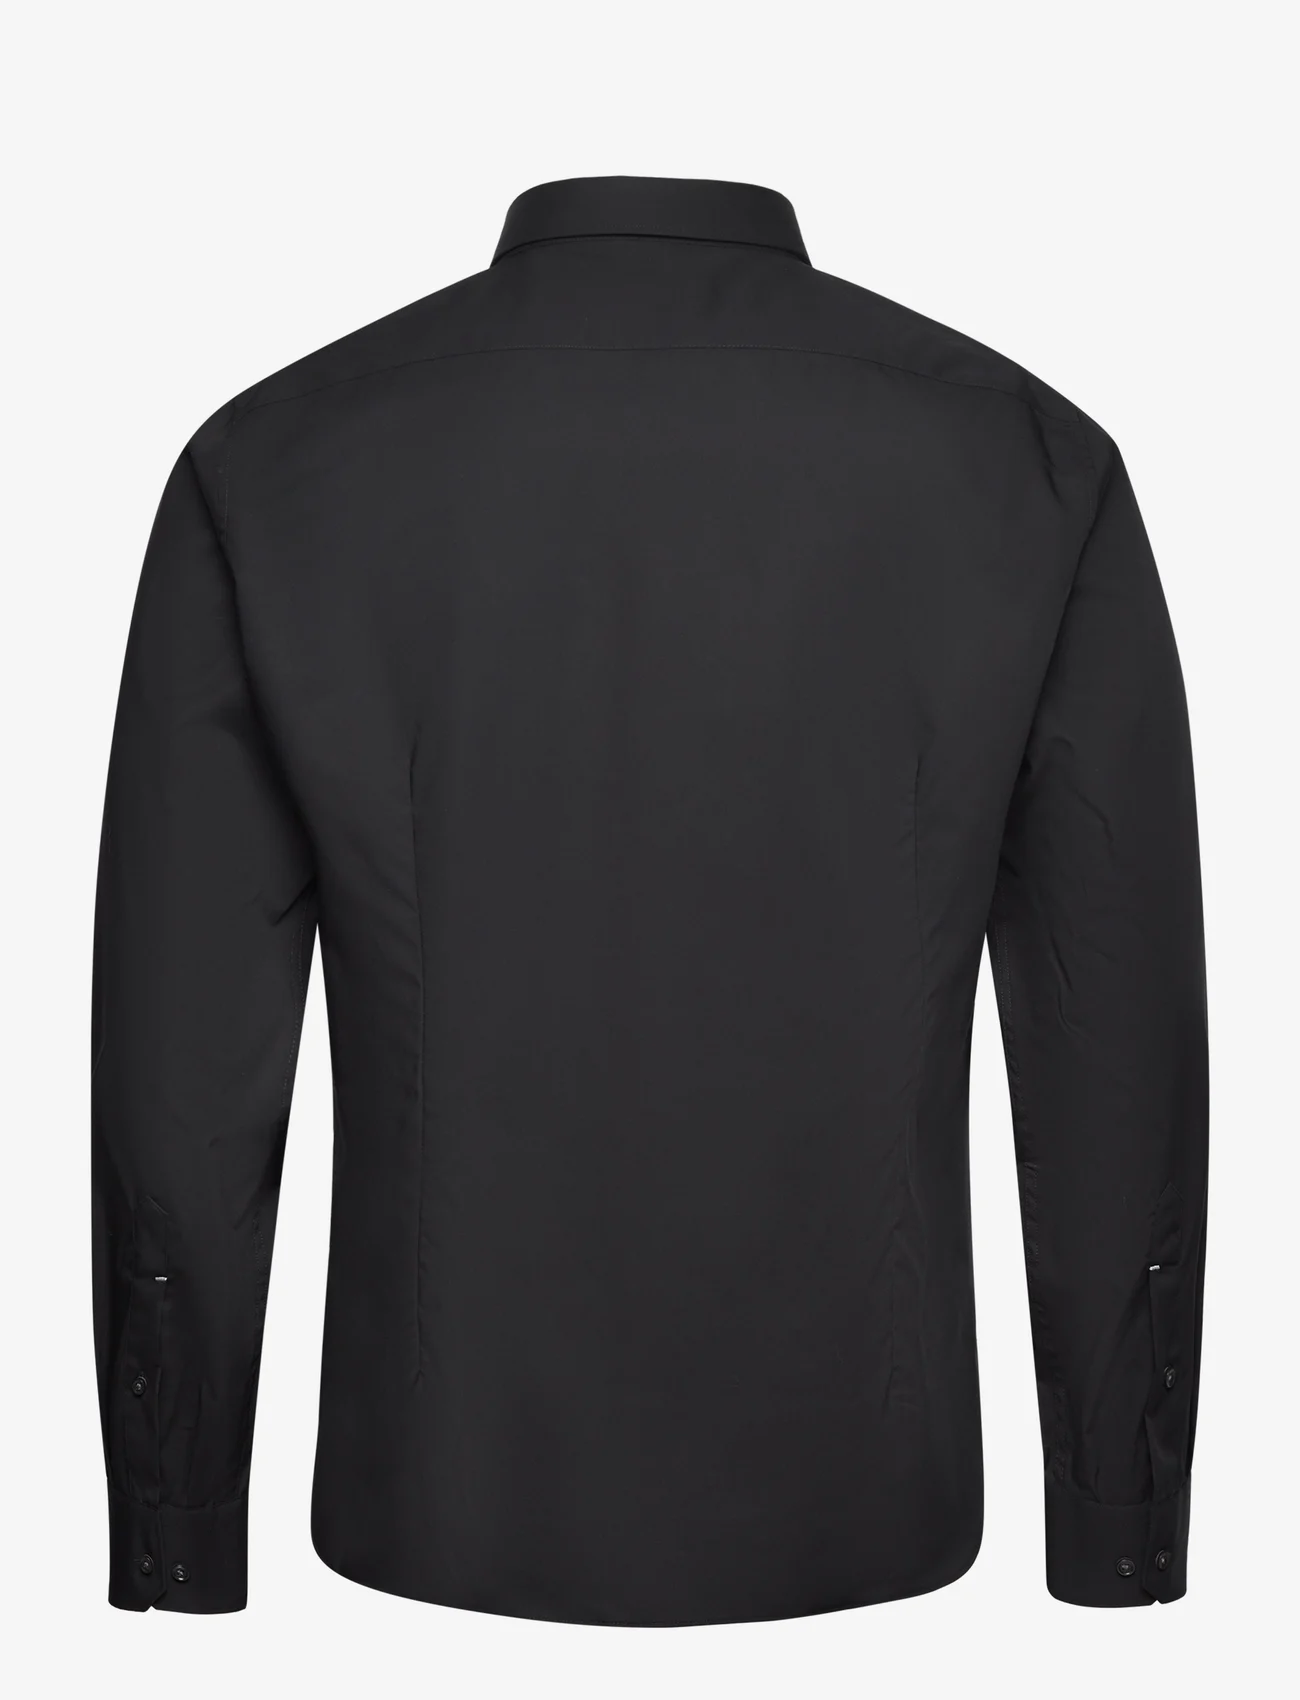 Michael Kors - POPLIN STRETCH MODERN SHIRT - basic skjortor - black - 1